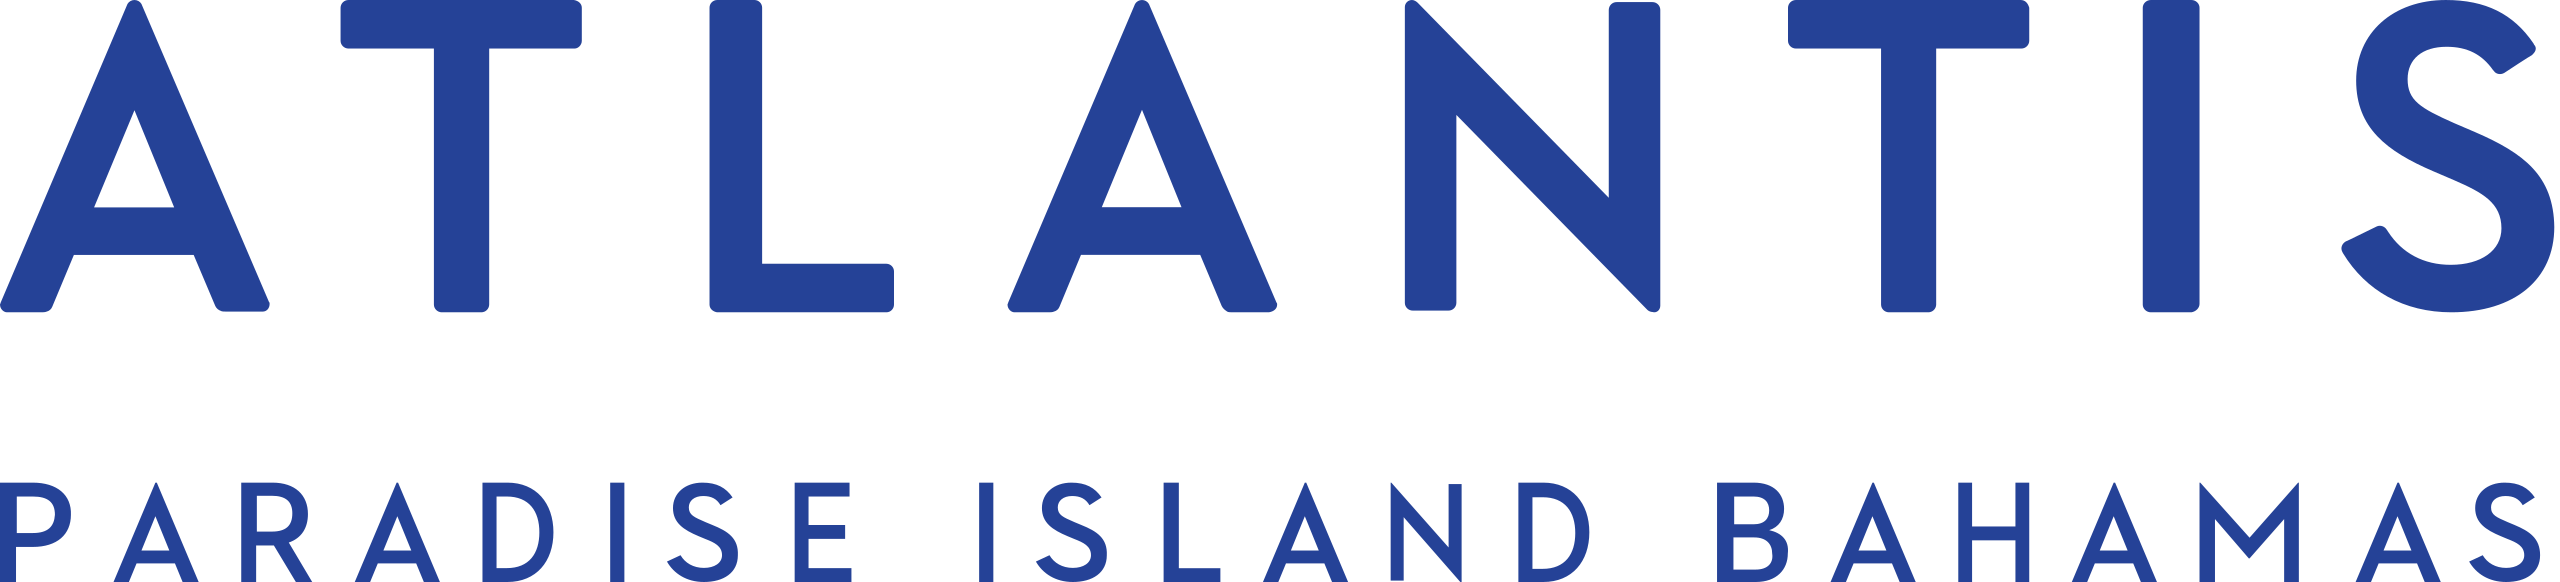 Logo for Atlantis Paradise Island Bahamas